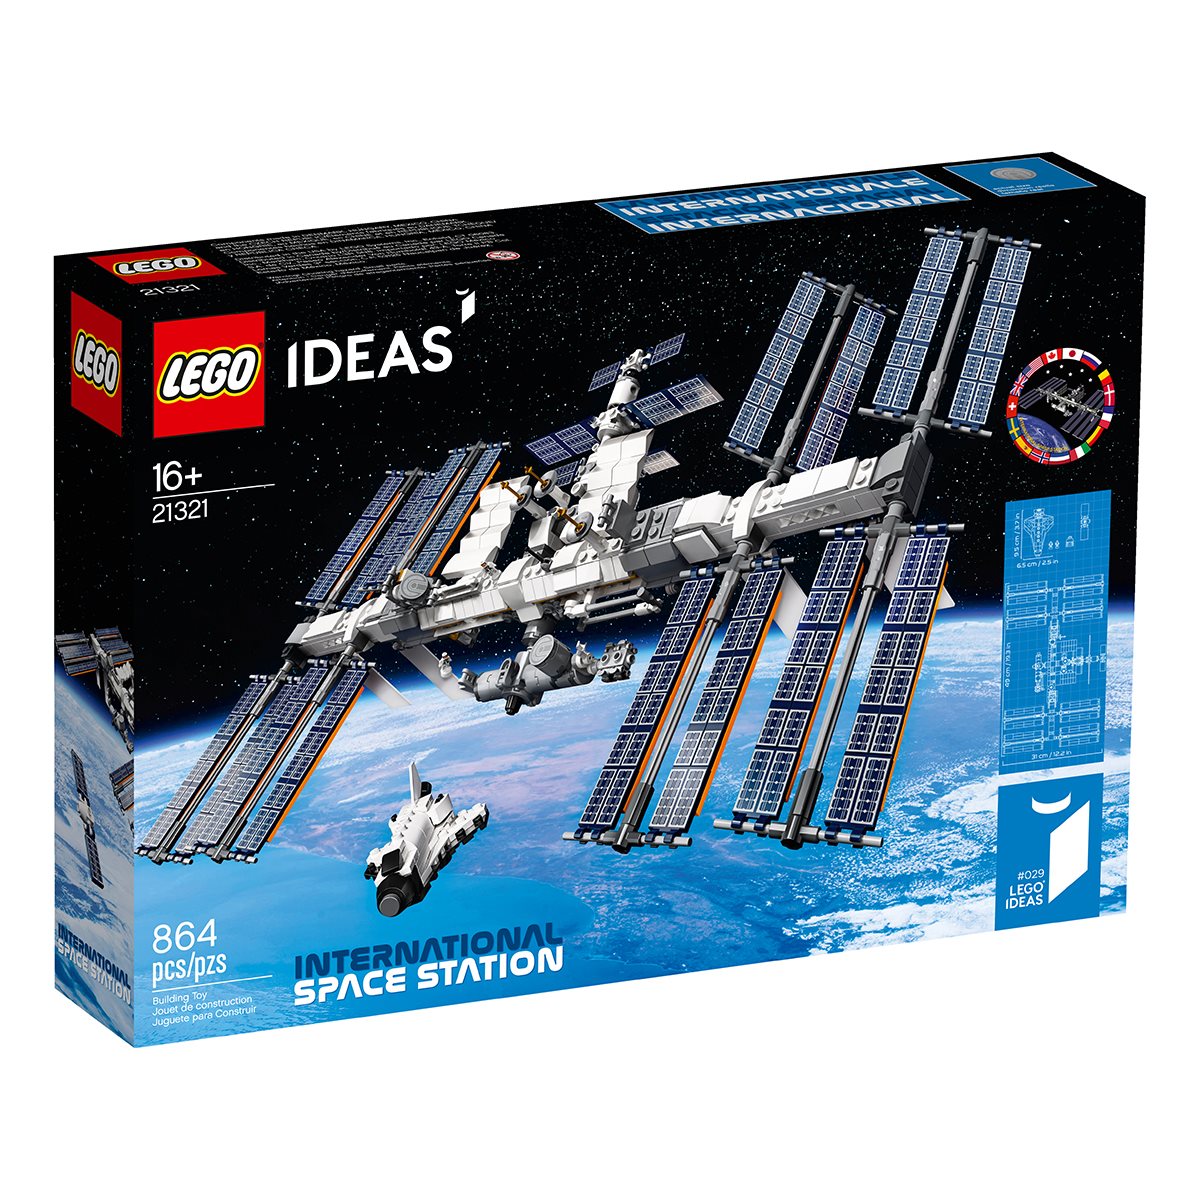 LEGO 21321 International Space Station